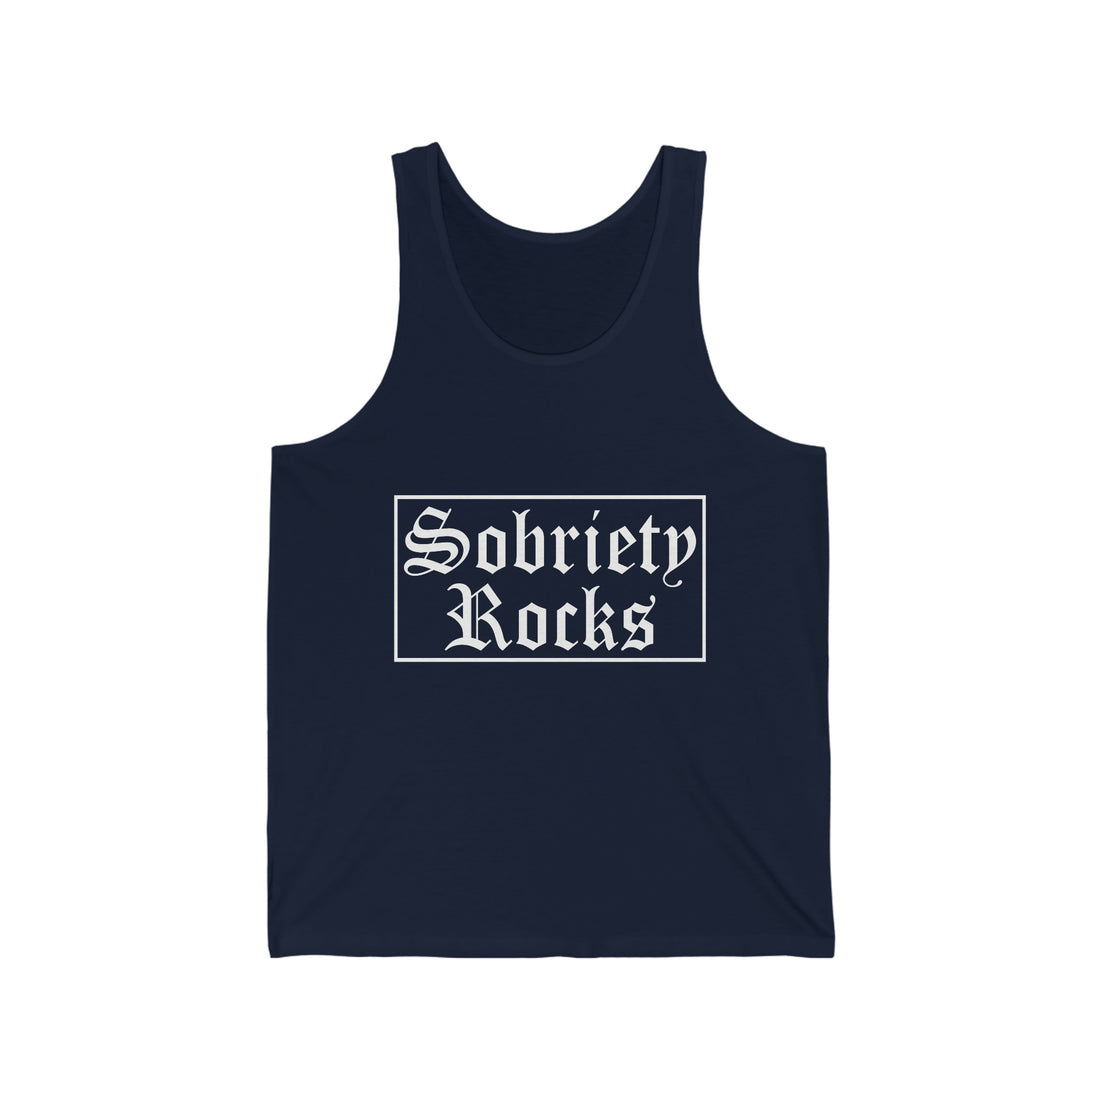 Sobriety Rocks - Unisex Jersey Tank Top